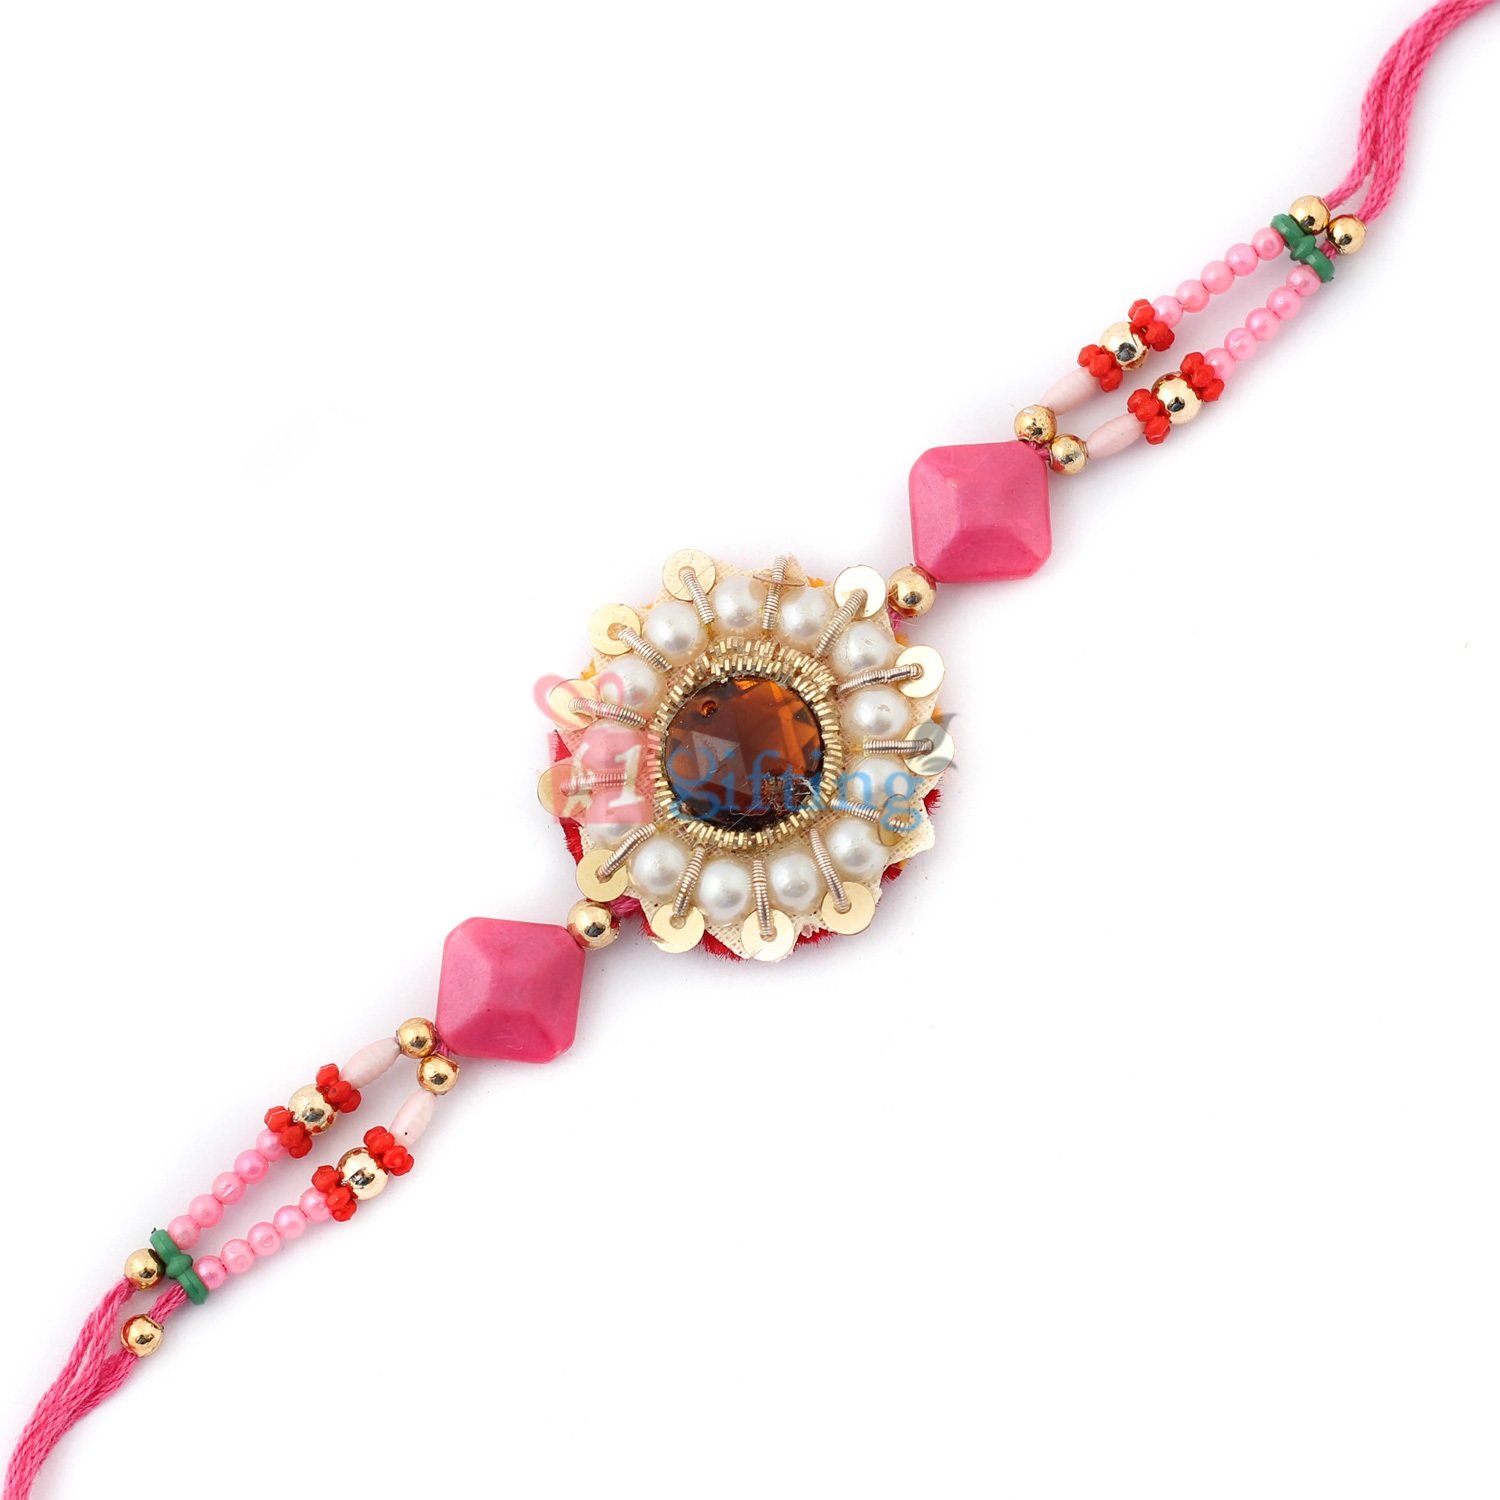 Flounce work of pearl, centered ruby, multi design beads in refreshing color of pink designer Rakhi